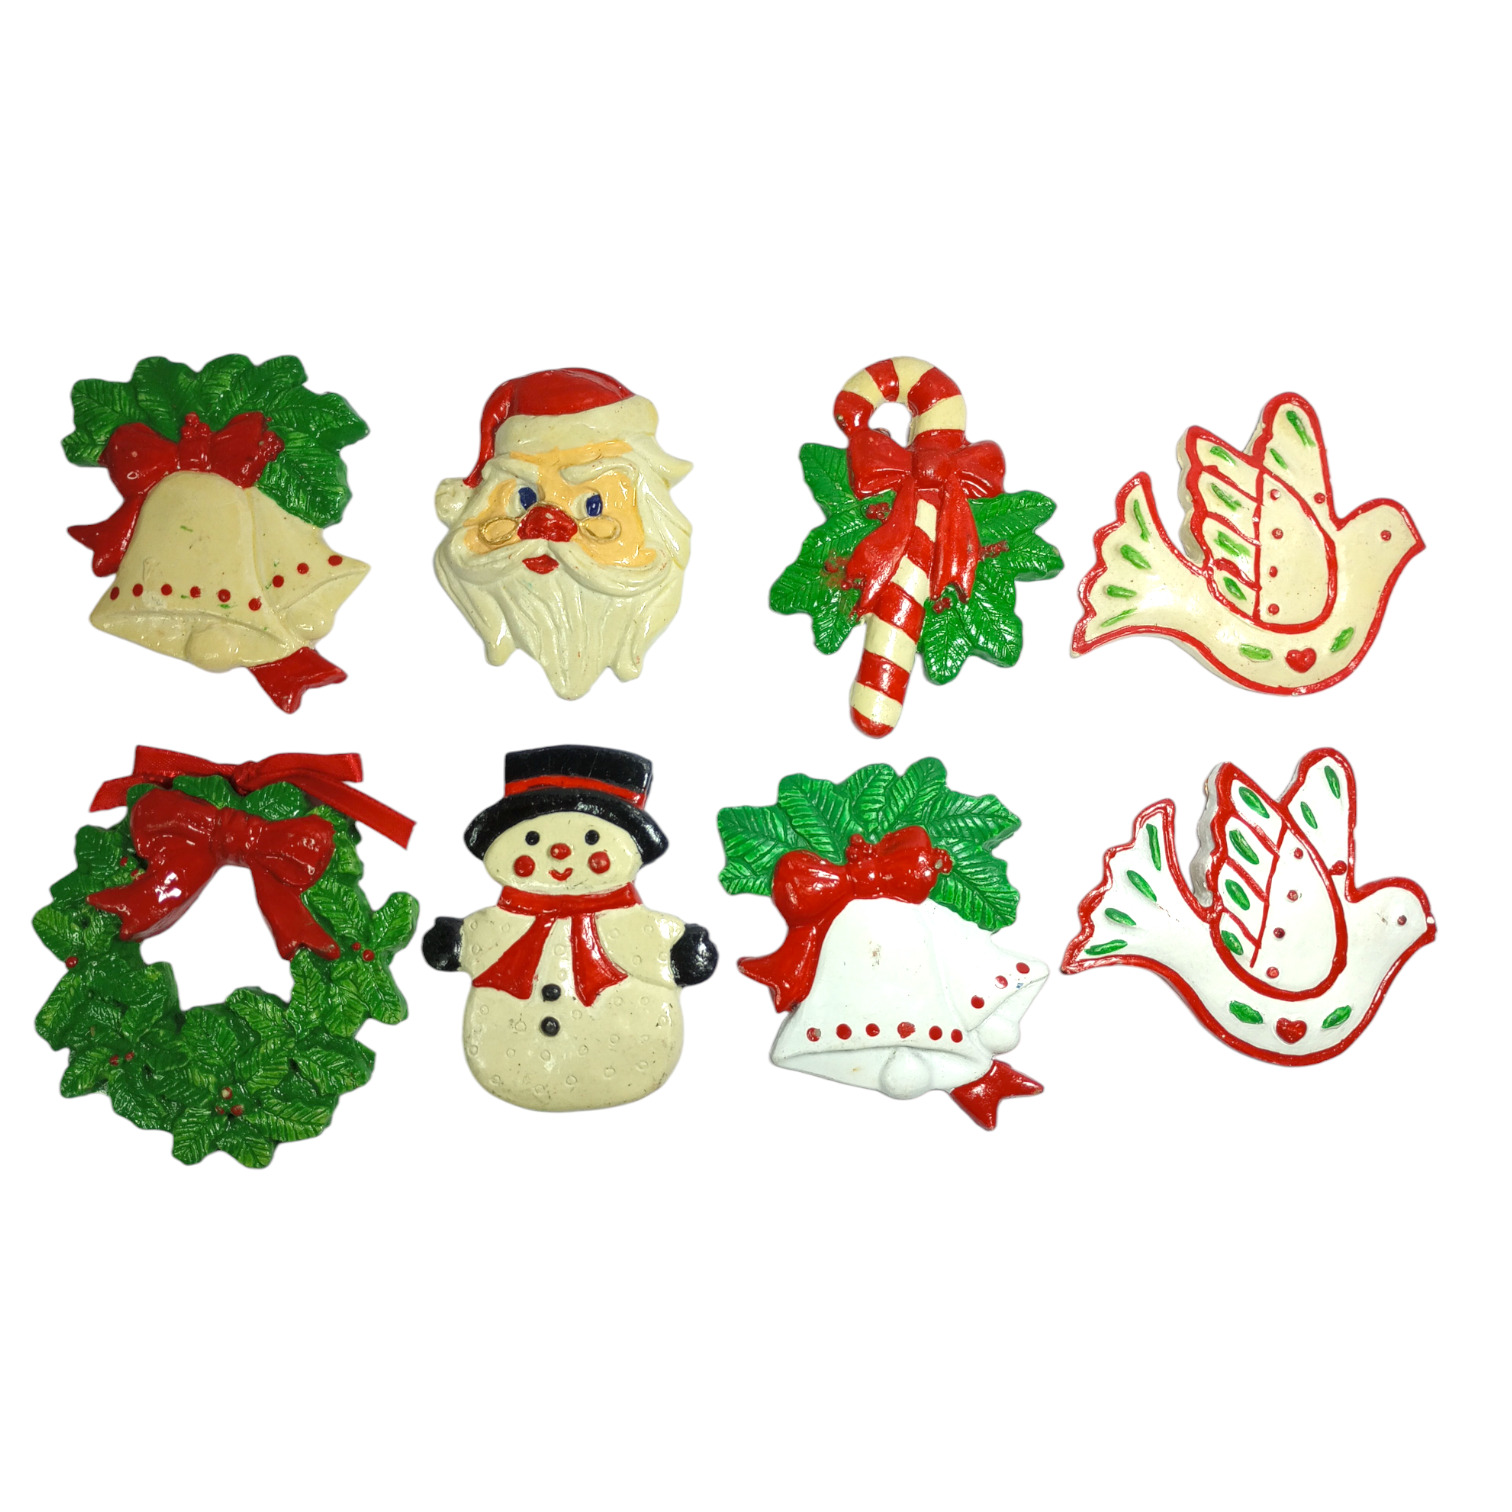 Vtg 1980s Christmas Ornaments One Sided Lot of 8 Snowman Santa Dove Wreath Bells